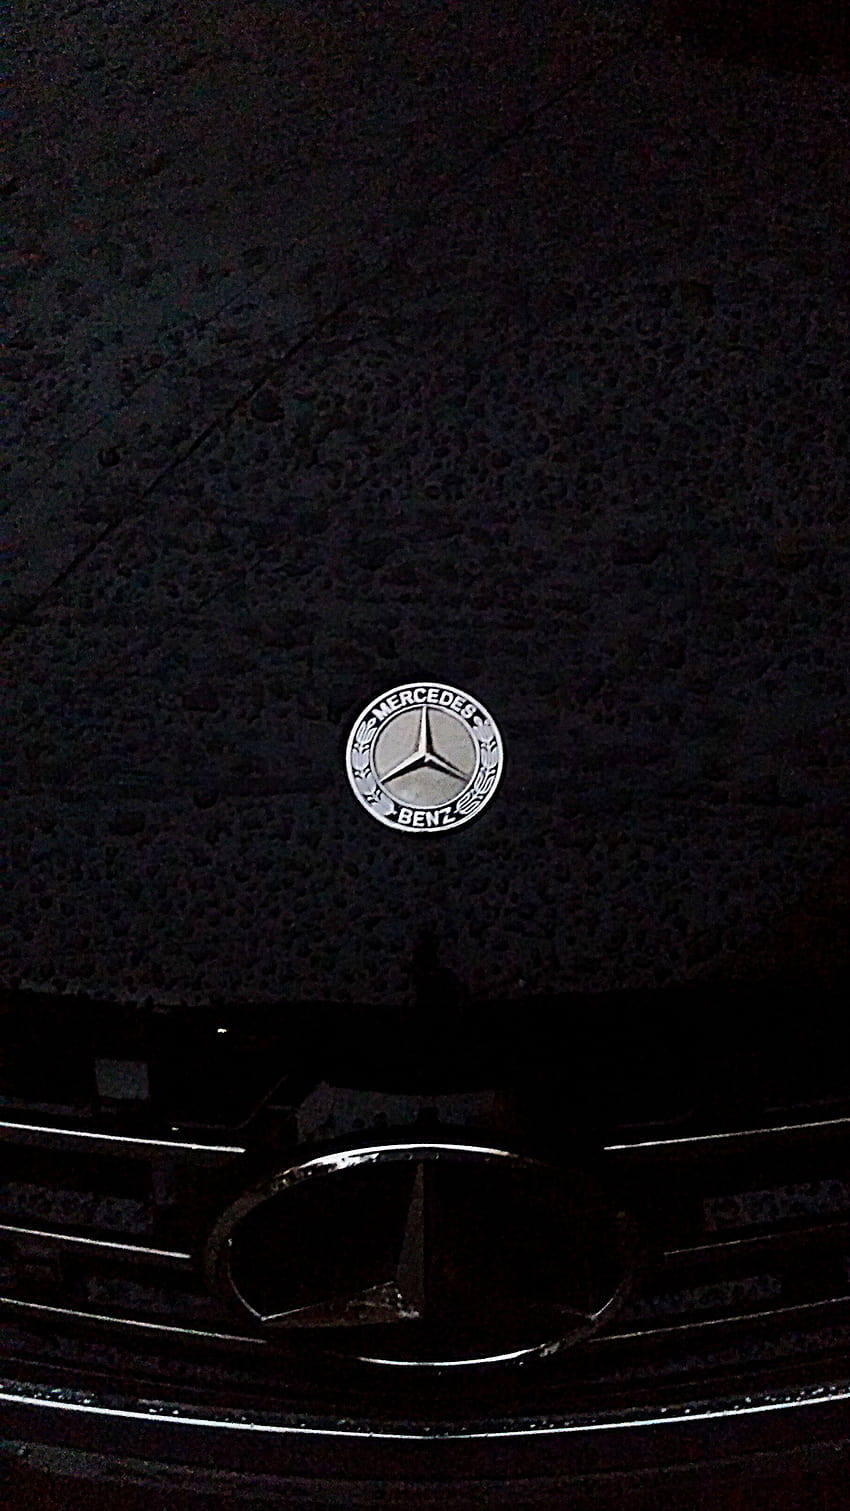 Mercedes logo, amoled, mercedes full, mercedes-benz, mercedes-benz